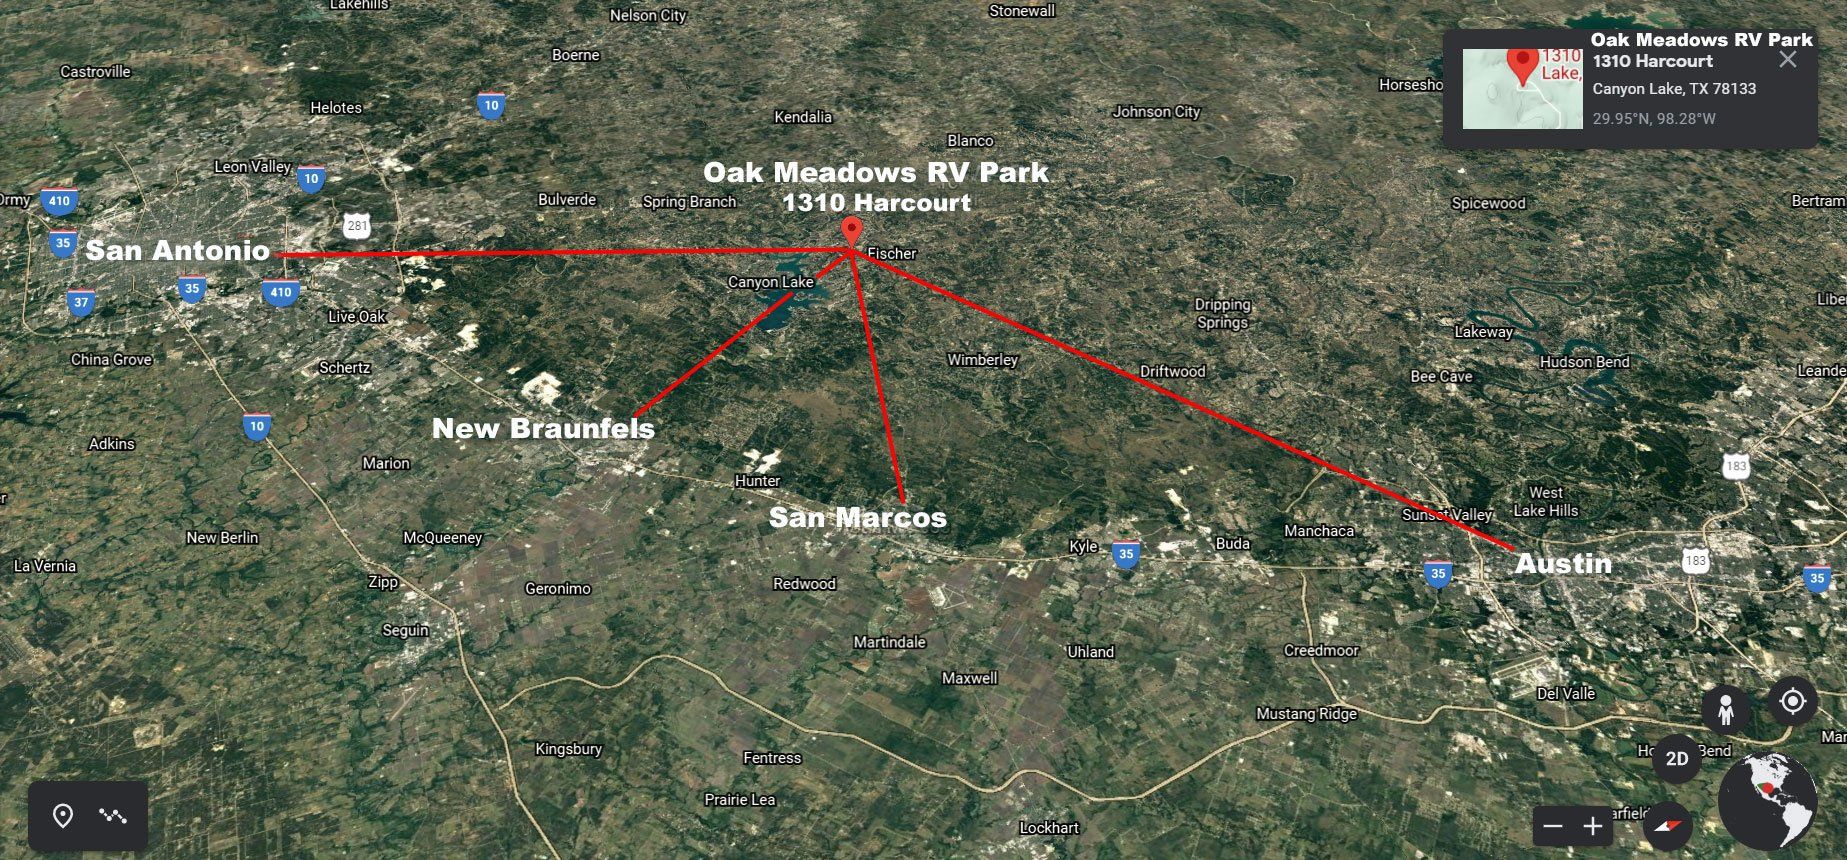 Map: Oak Meadows RV Park is located near San Antonio-New Braunfels-San Marcos-Austin-Texas from Canyon Lake TX